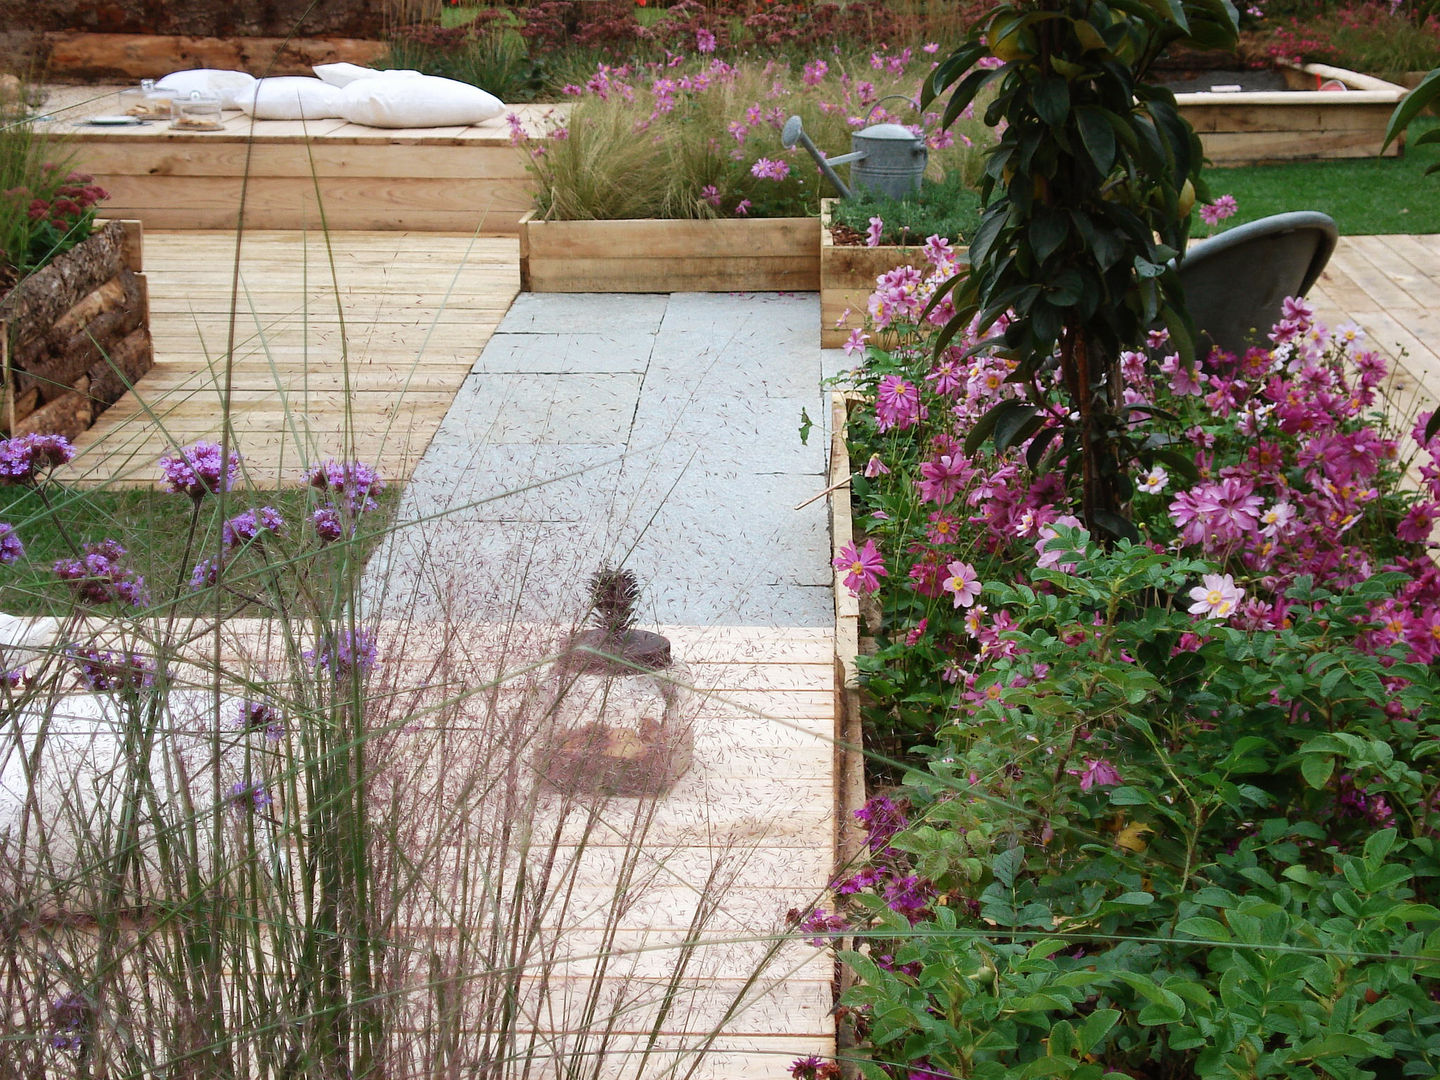 'Tutti giù per terra', Barbara Negretti - Garden design - Barbara Negretti - Garden design - Vườn: thiết kế nội thất · bố trí · Ảnh